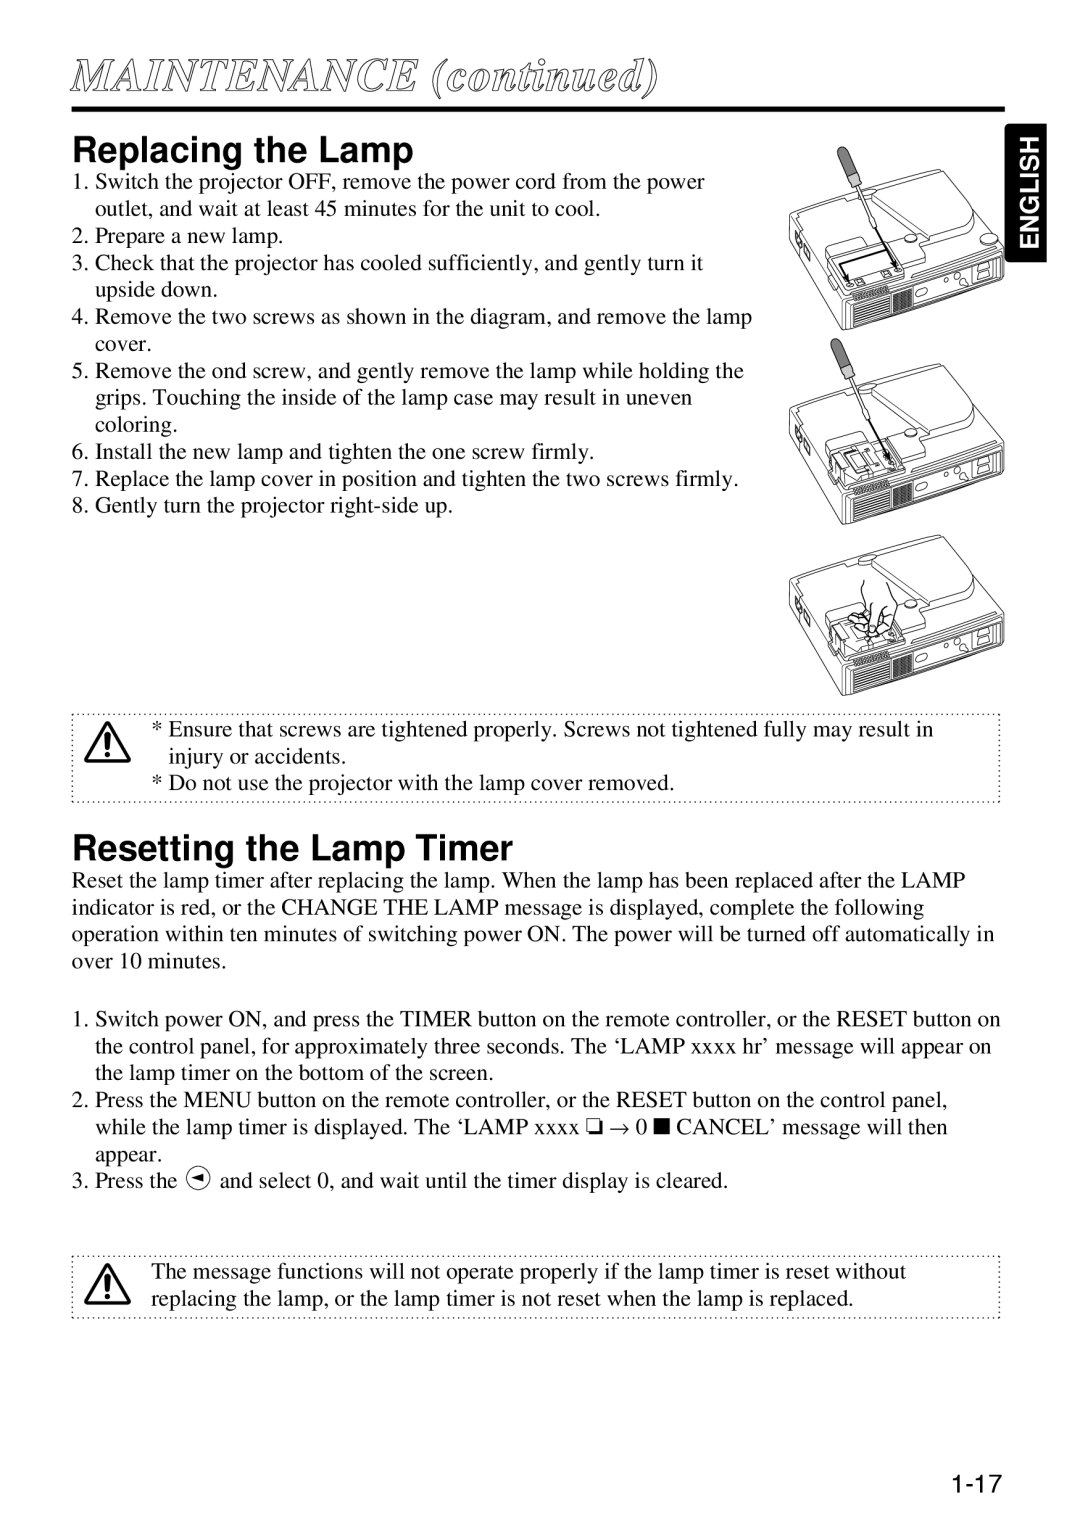 Polaroid SVGA 270 manual MAINTENANCE continued, Replacing the Lamp, Resetting the Lamp Timer, English 